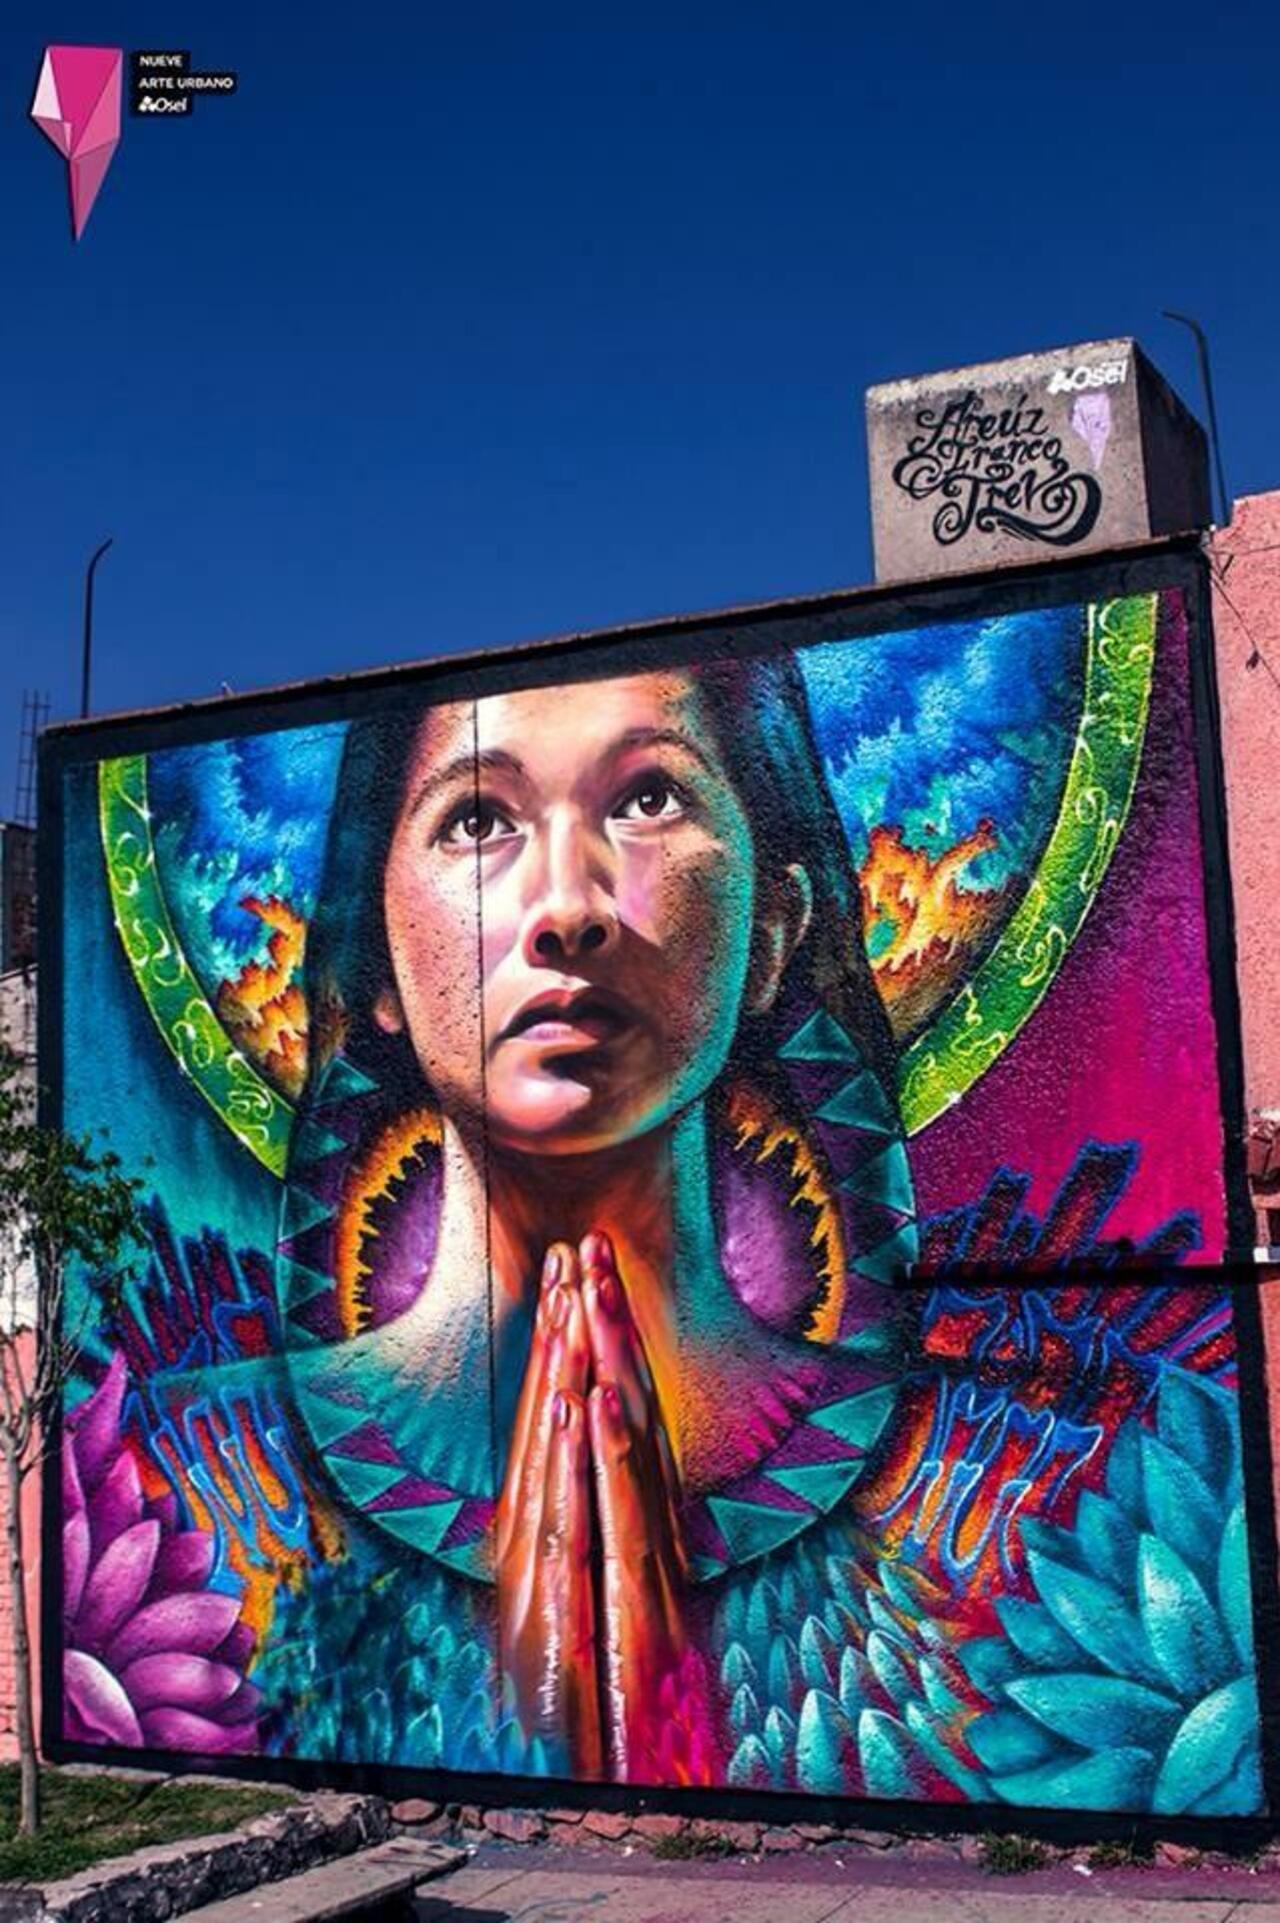 Artist Areúz 77 new Street Art mural in Queretaro, Mexico #Art #graffiti #mural #streetart http://t.co/PnTgxtItAi